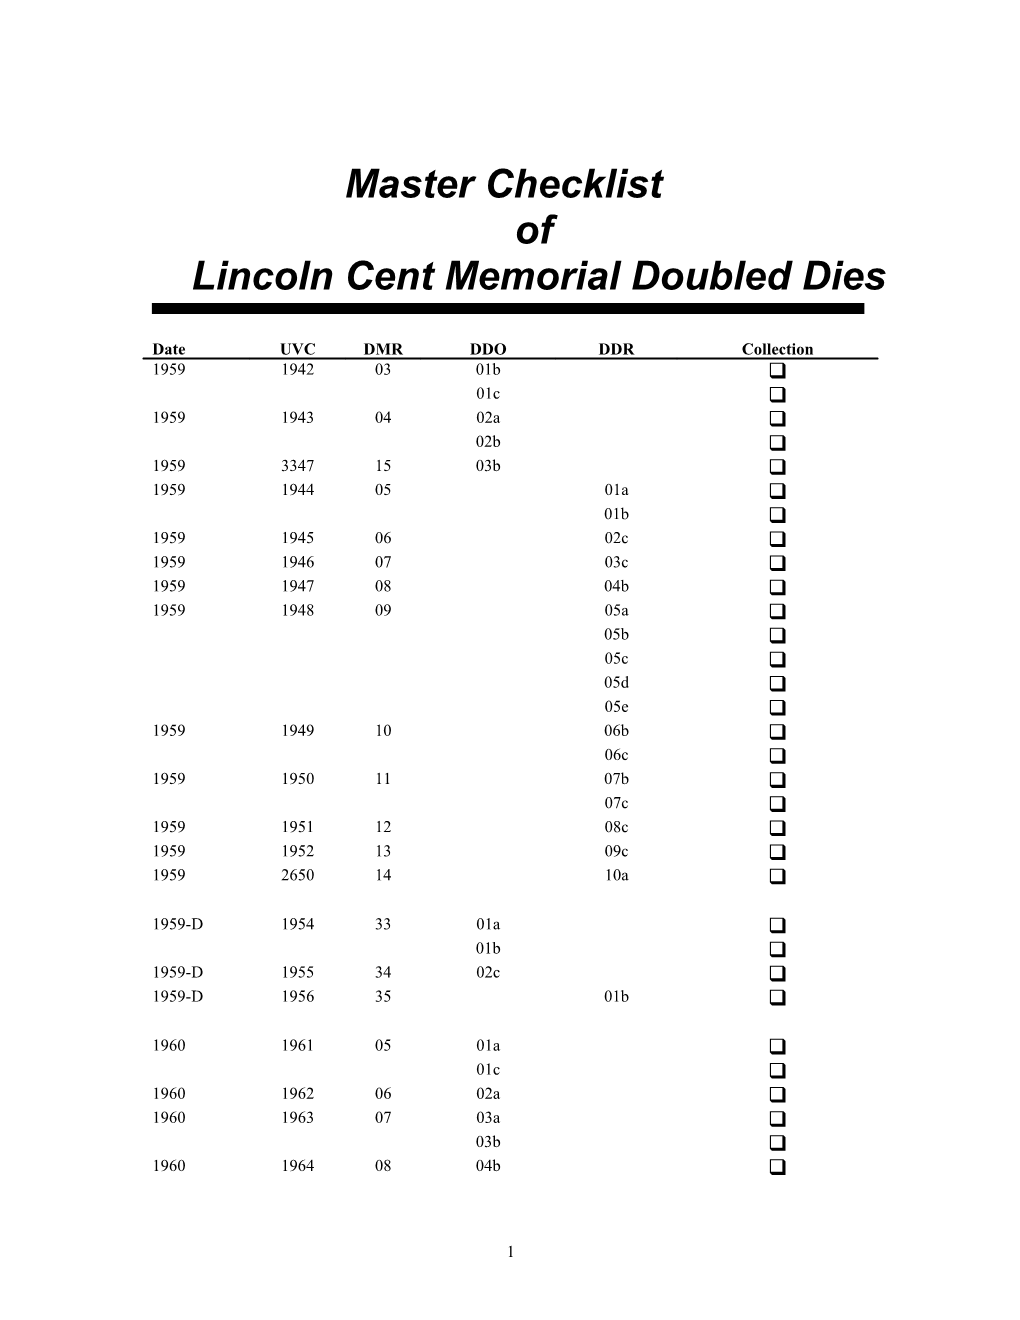 Master Checklist of Lincoln Rpms